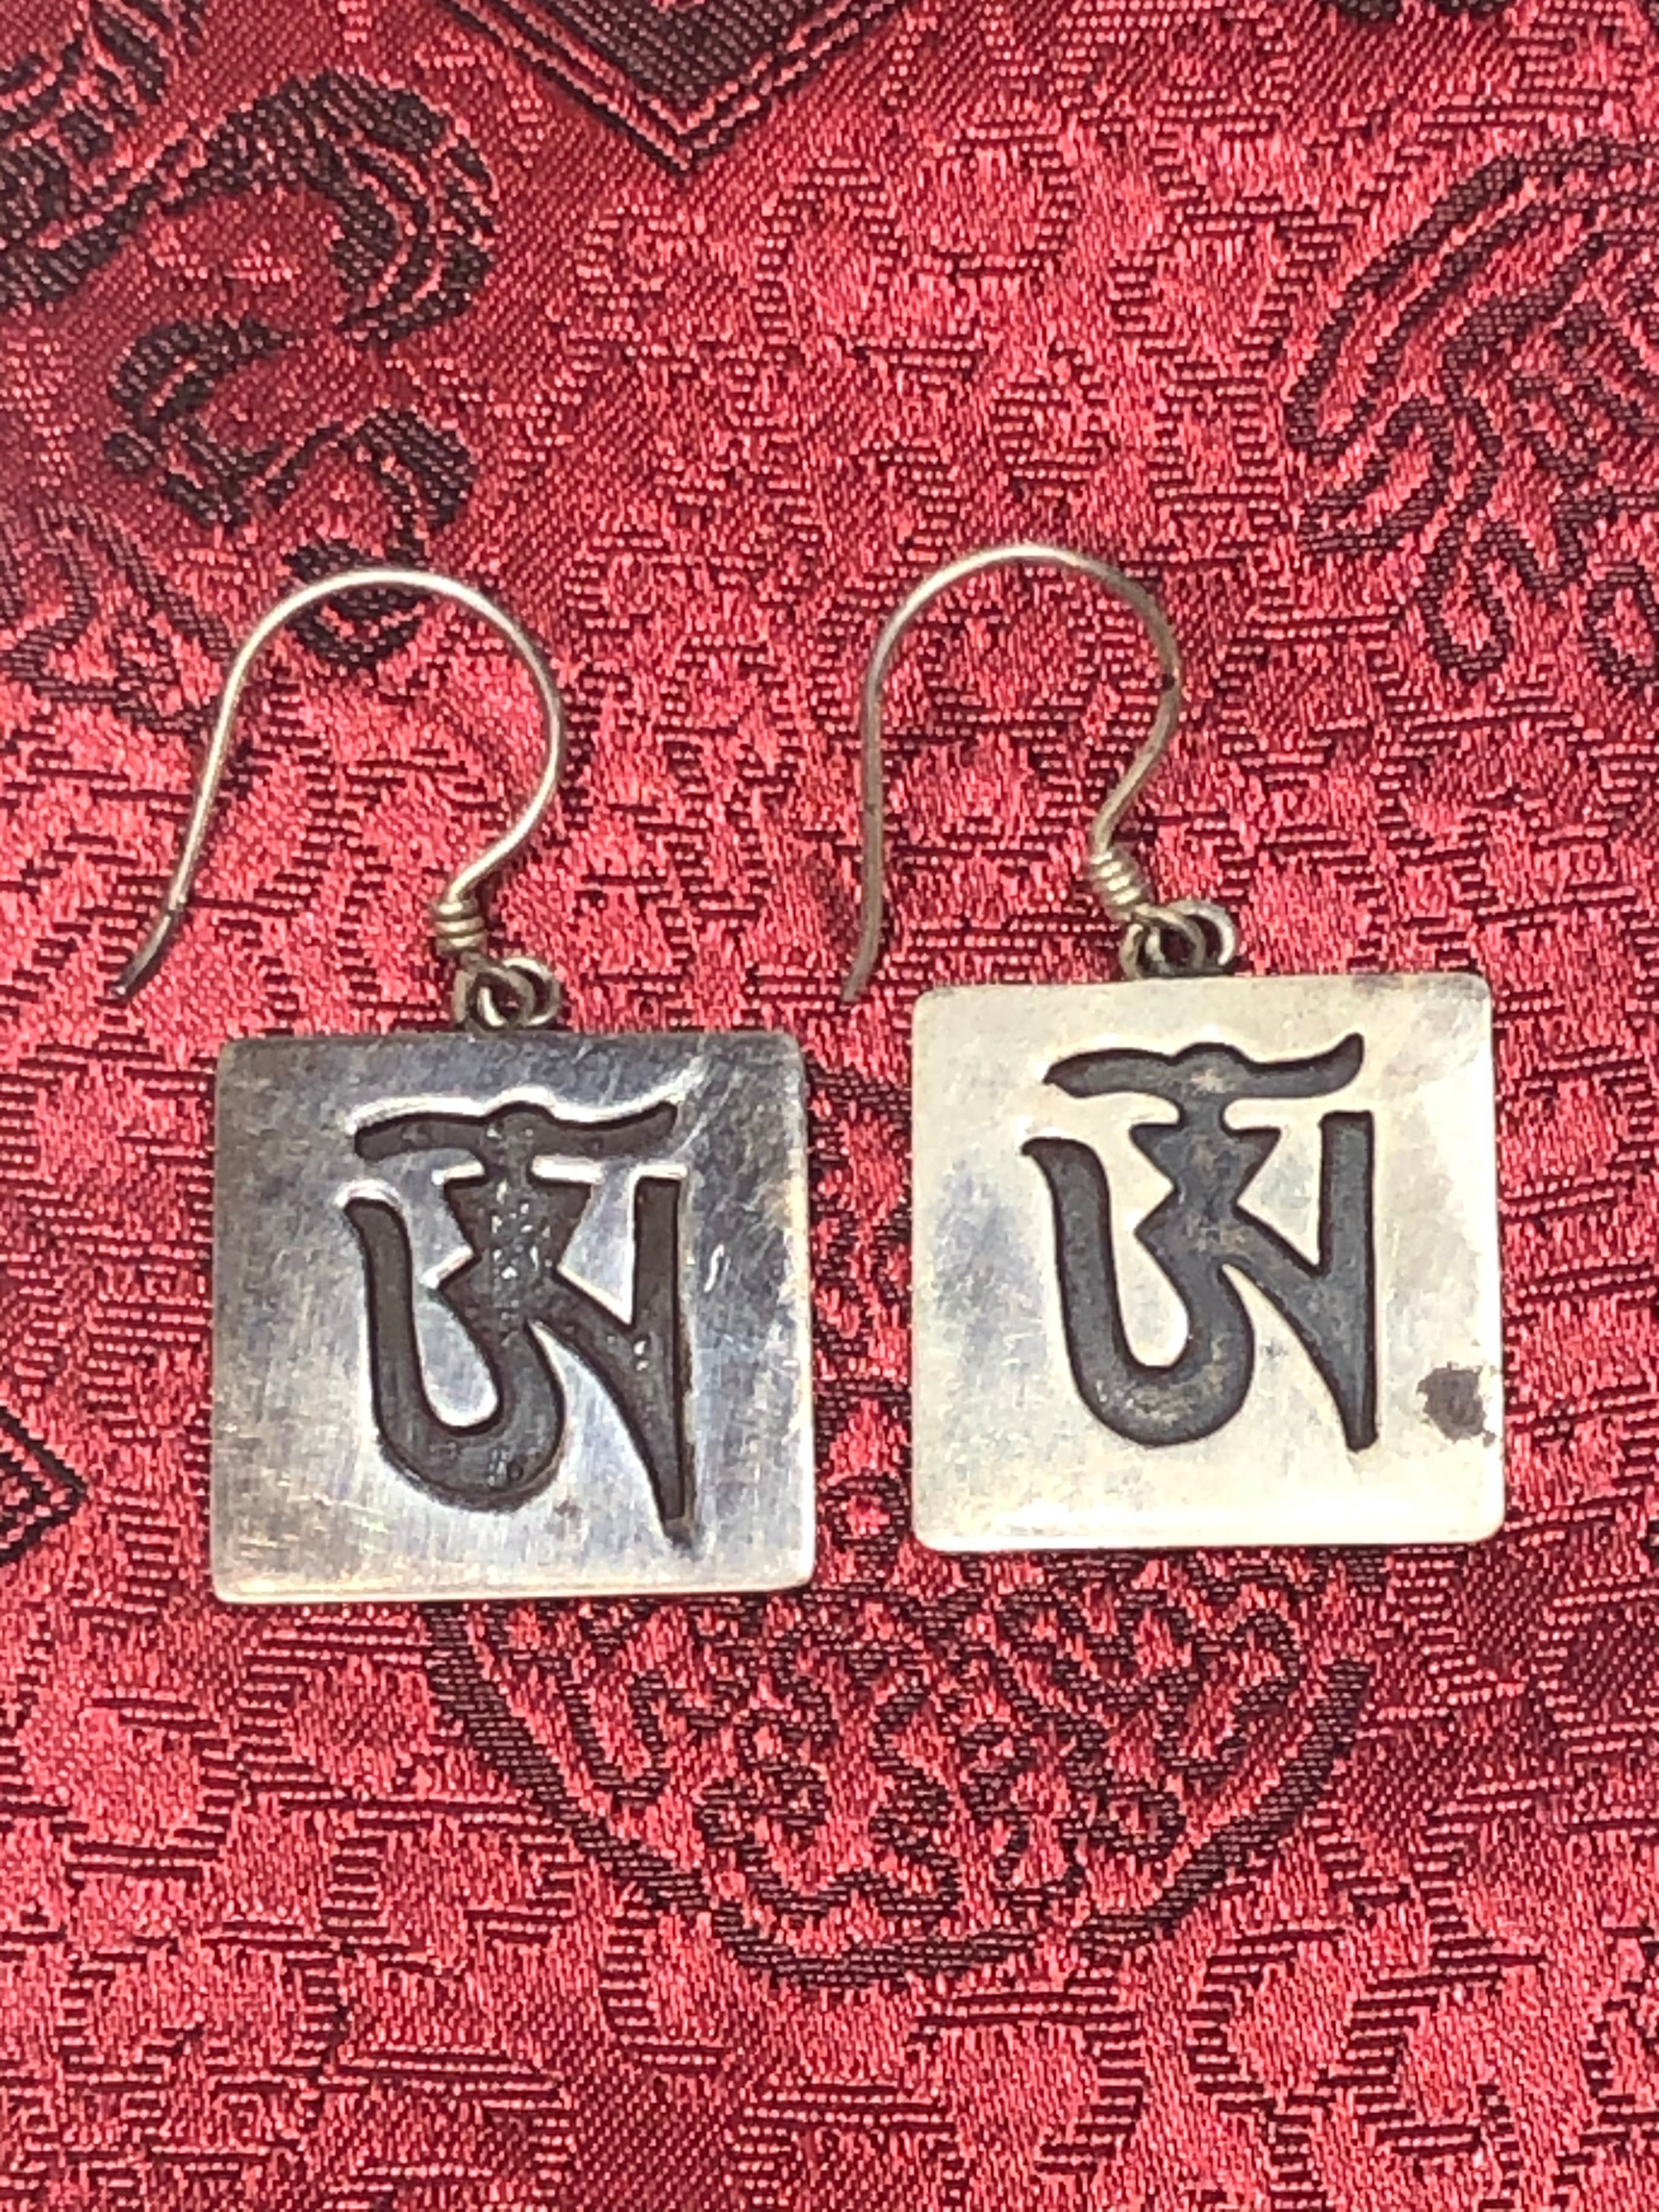 OM Tibetan Silver Earrings(TGSE 95)